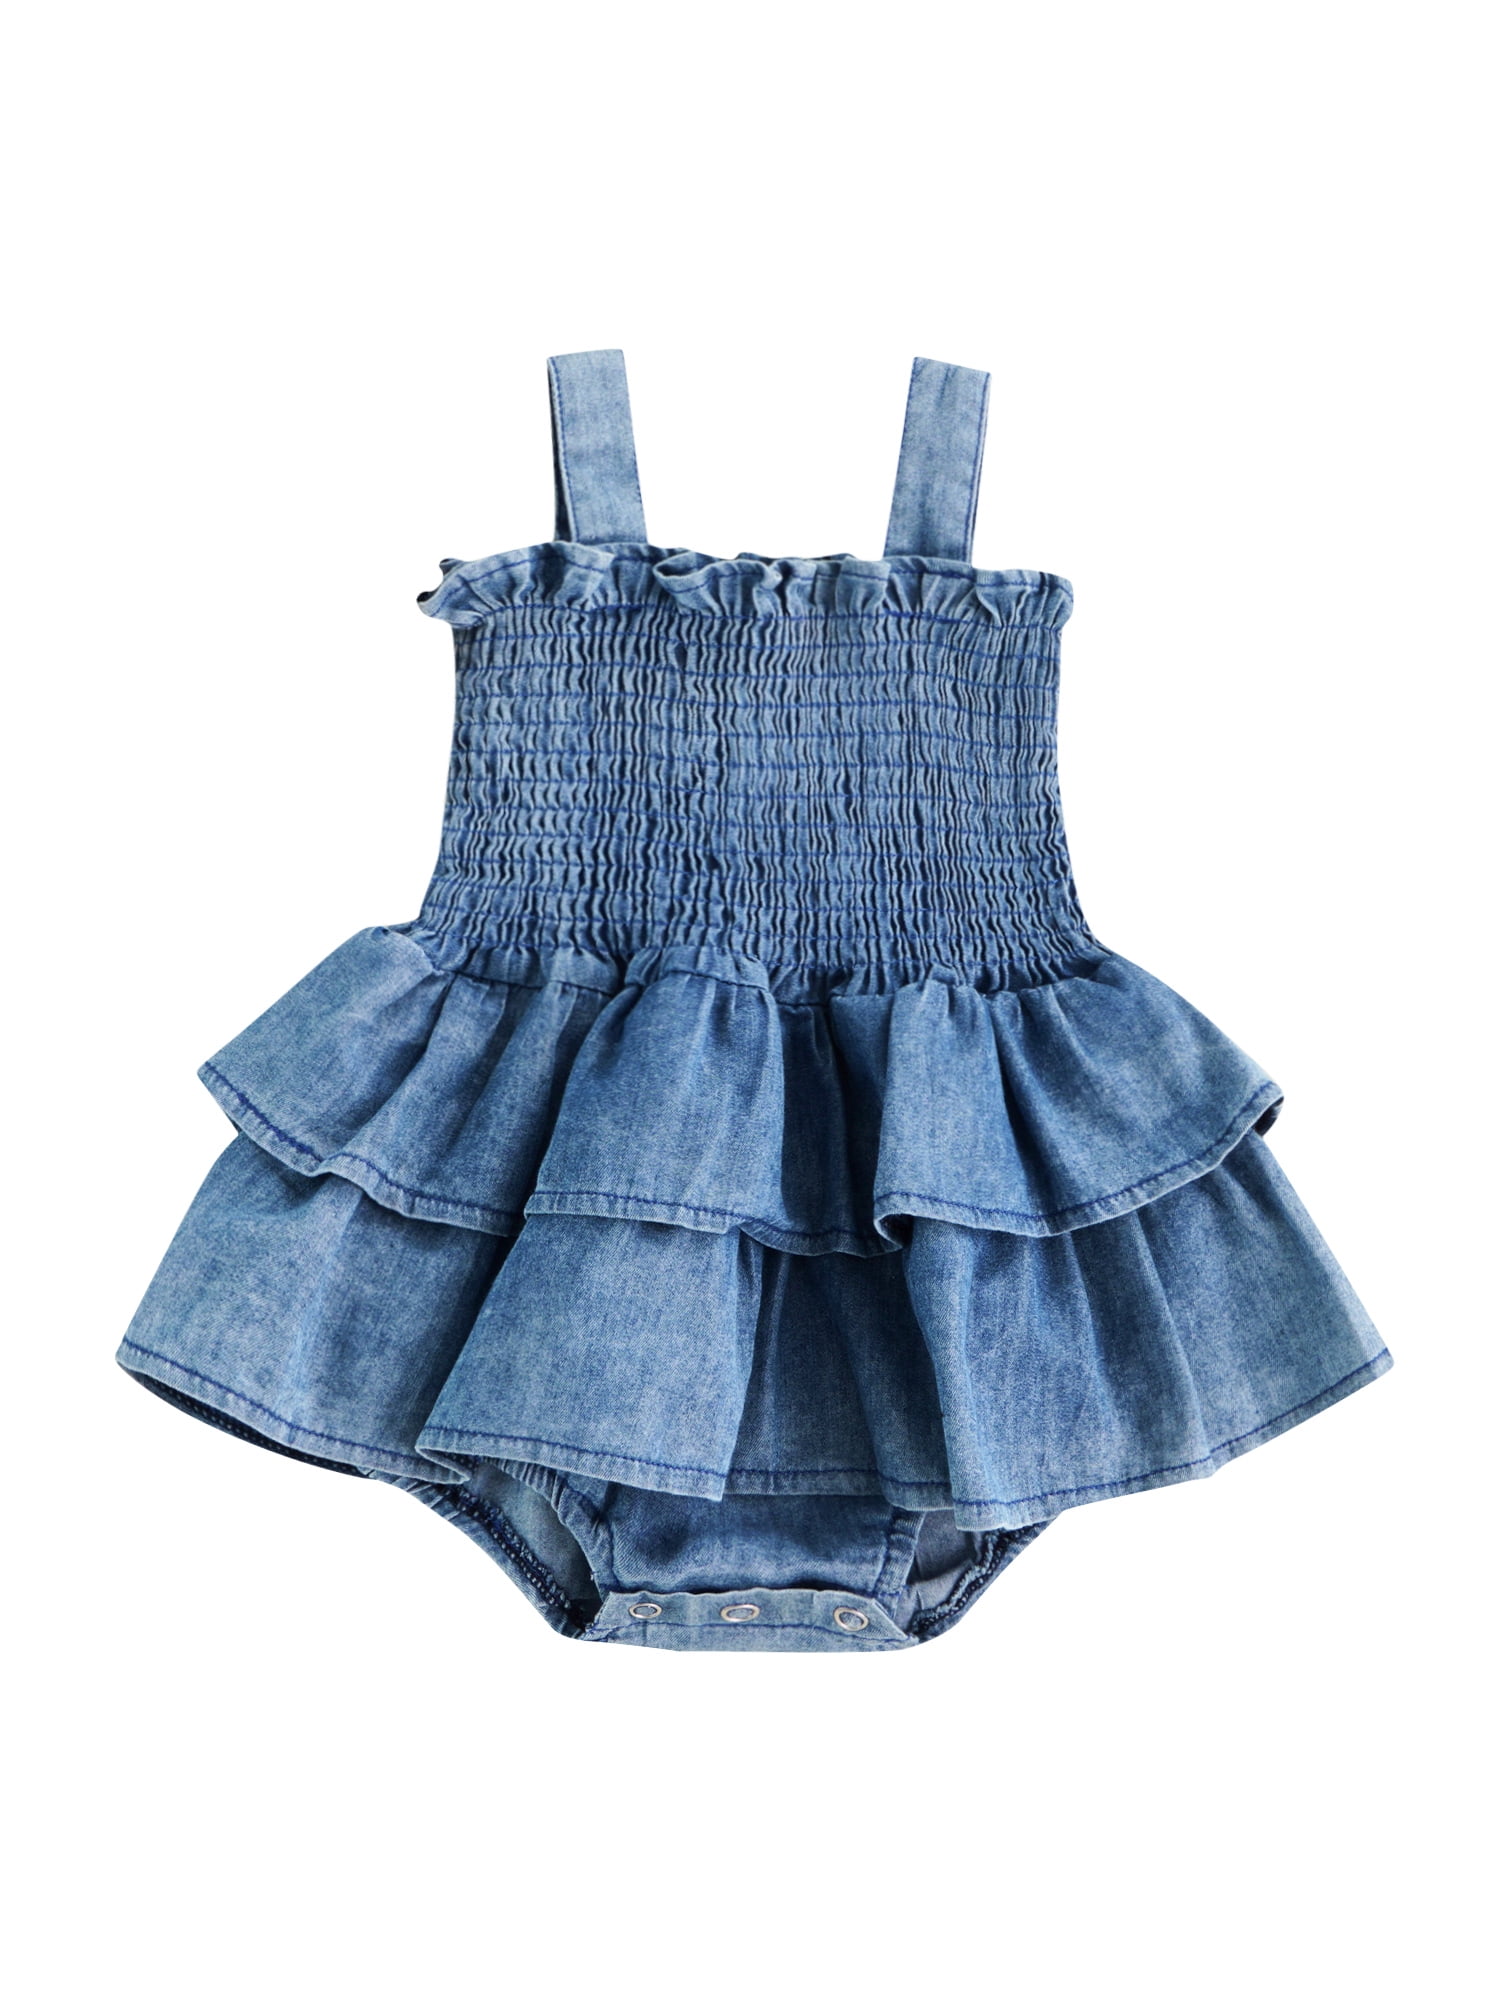 New 9 12 18 24 M Girls' Baby Birthday Denim Dress Dresses For Newborn Baby  Girls' Clothing Spring Fall Costume Dress D Color Blue Kid Size 6M